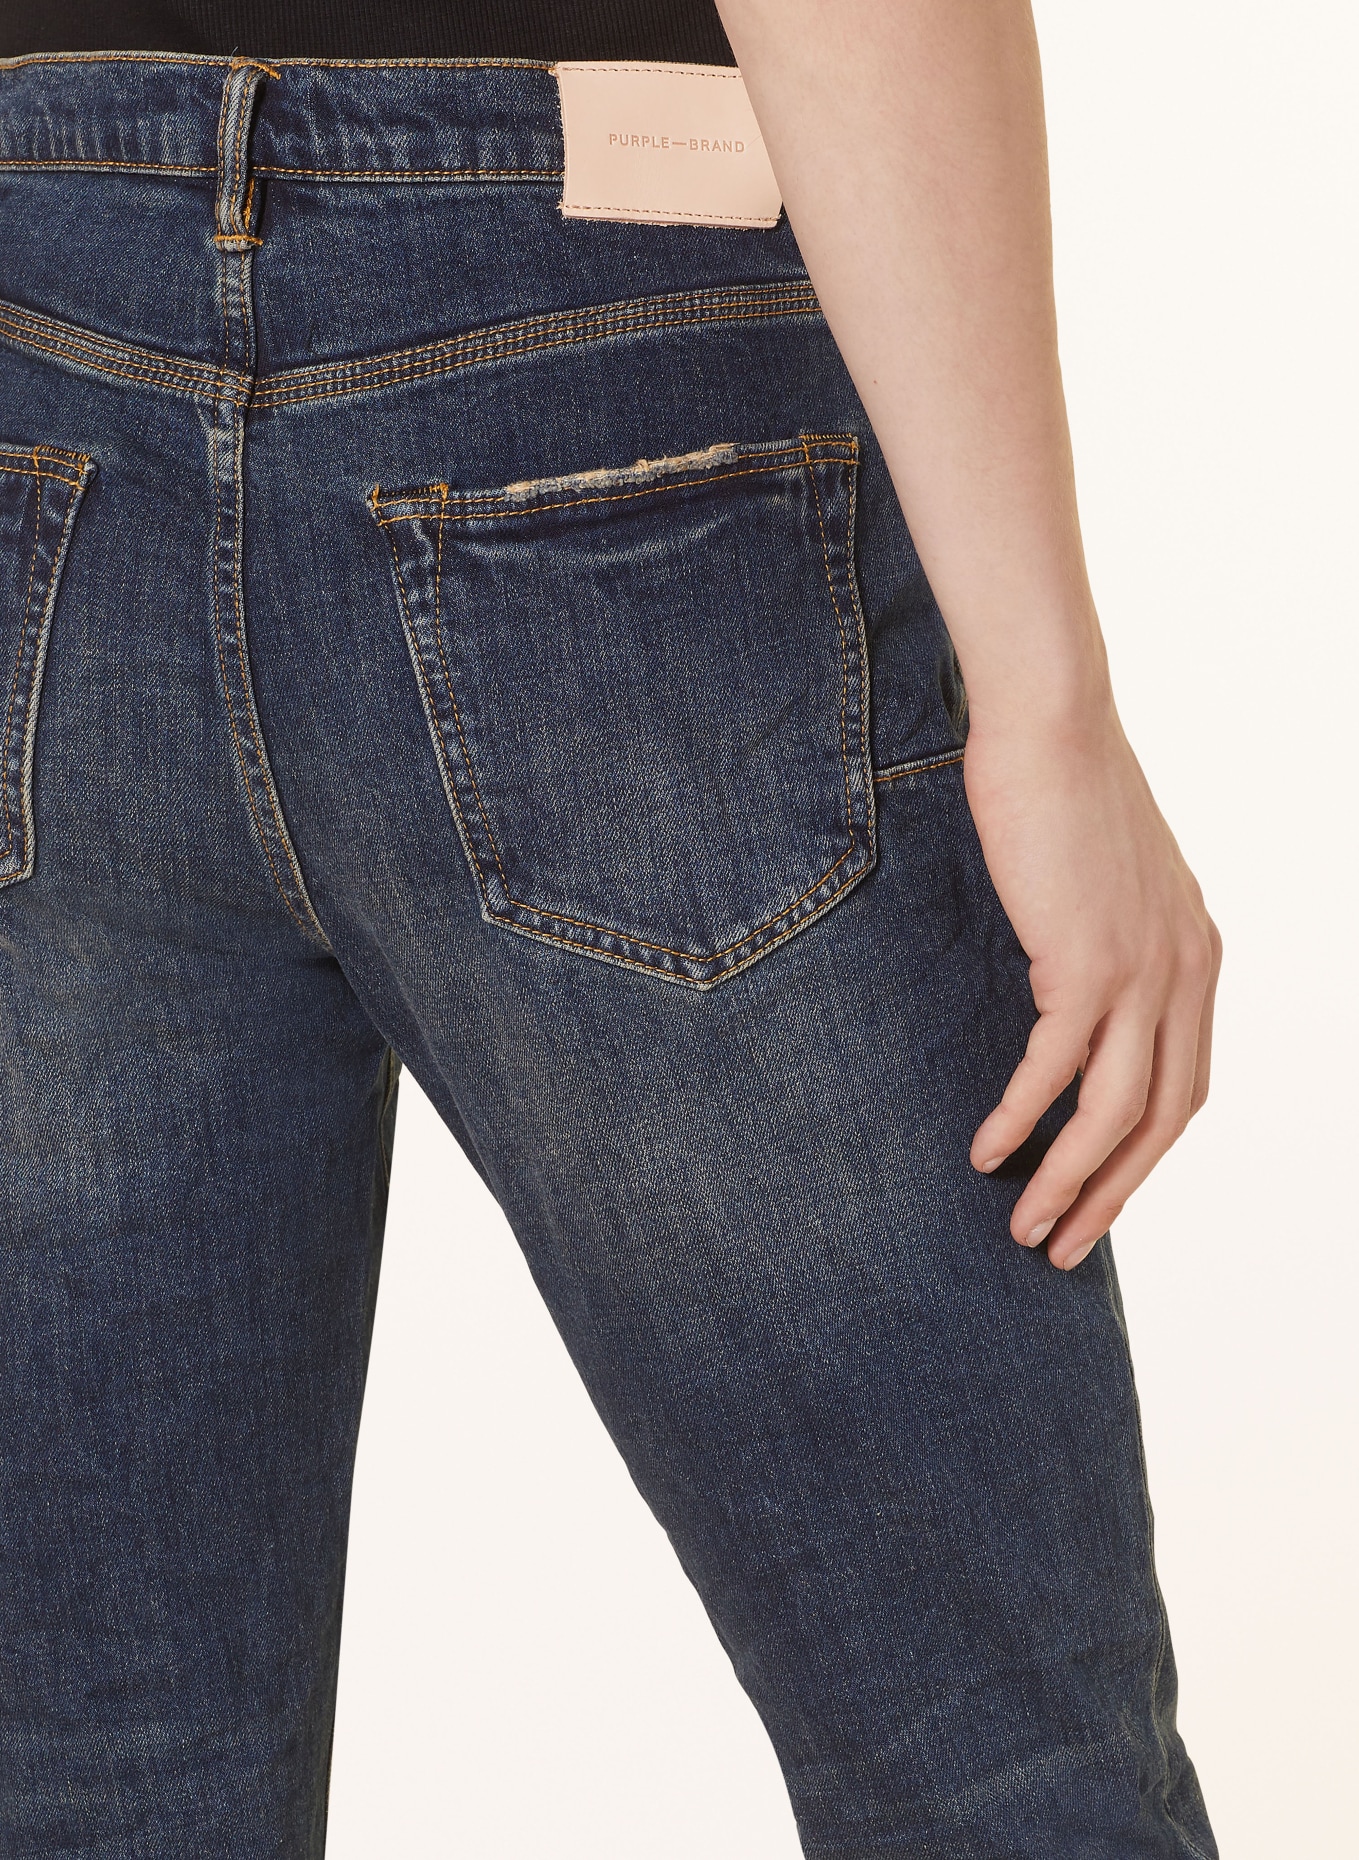 PURPLE BRAND Jeans P001 Skinny Fit, Farbe: DK INDIGO (Bild 6)